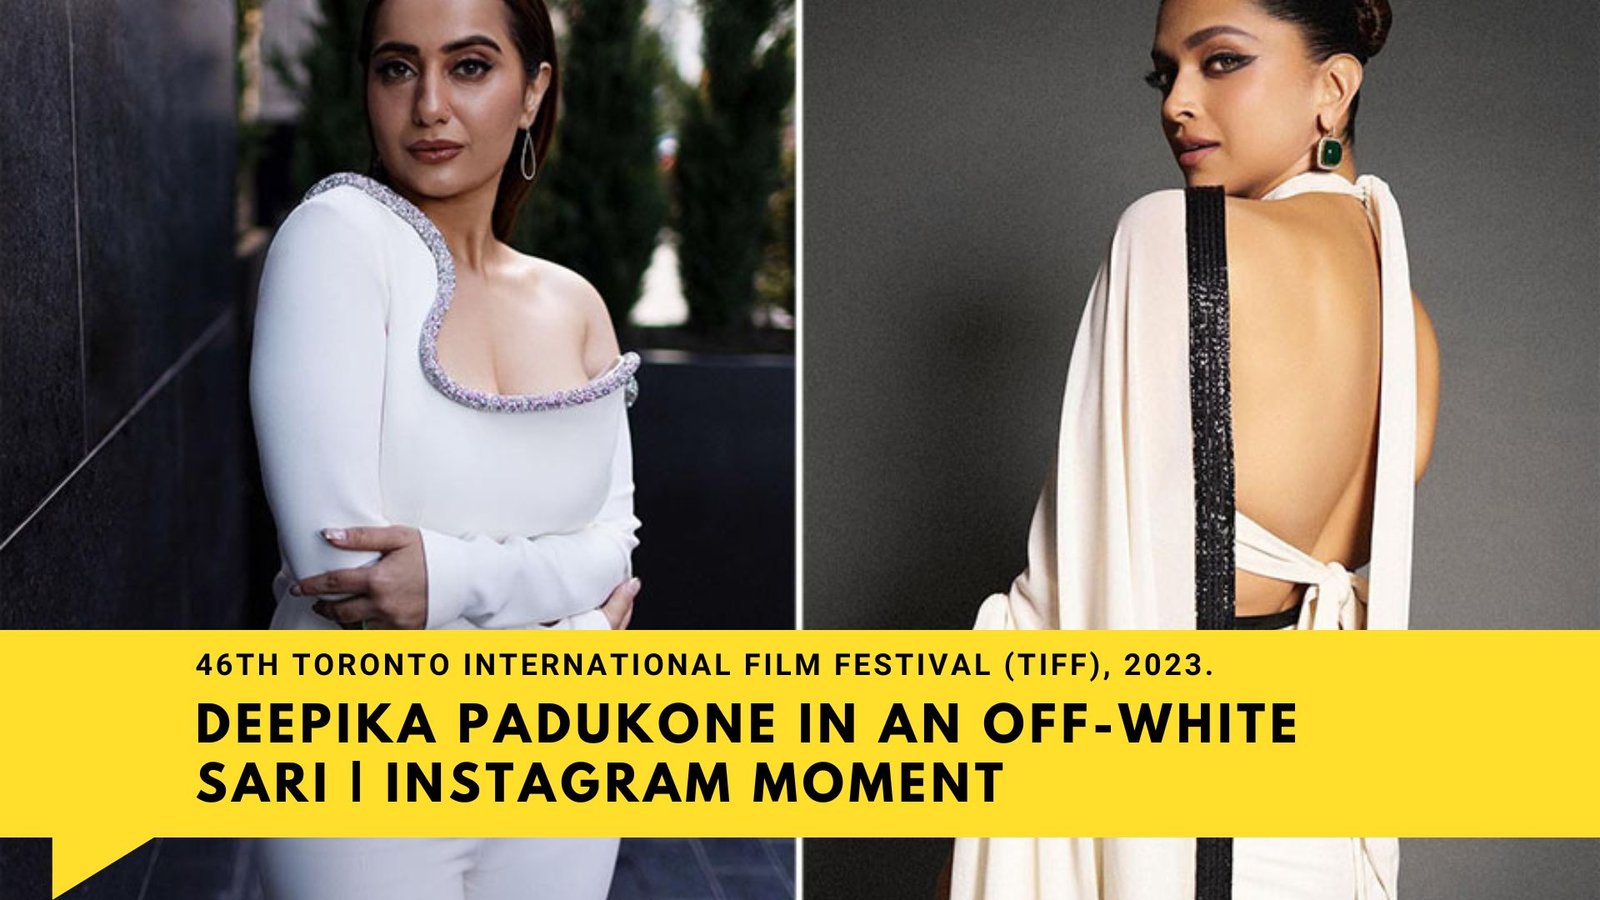 Top Instagram moments range from Kusha Kapila's TIFF attire to Deepika Padukone wearing an off-white sari